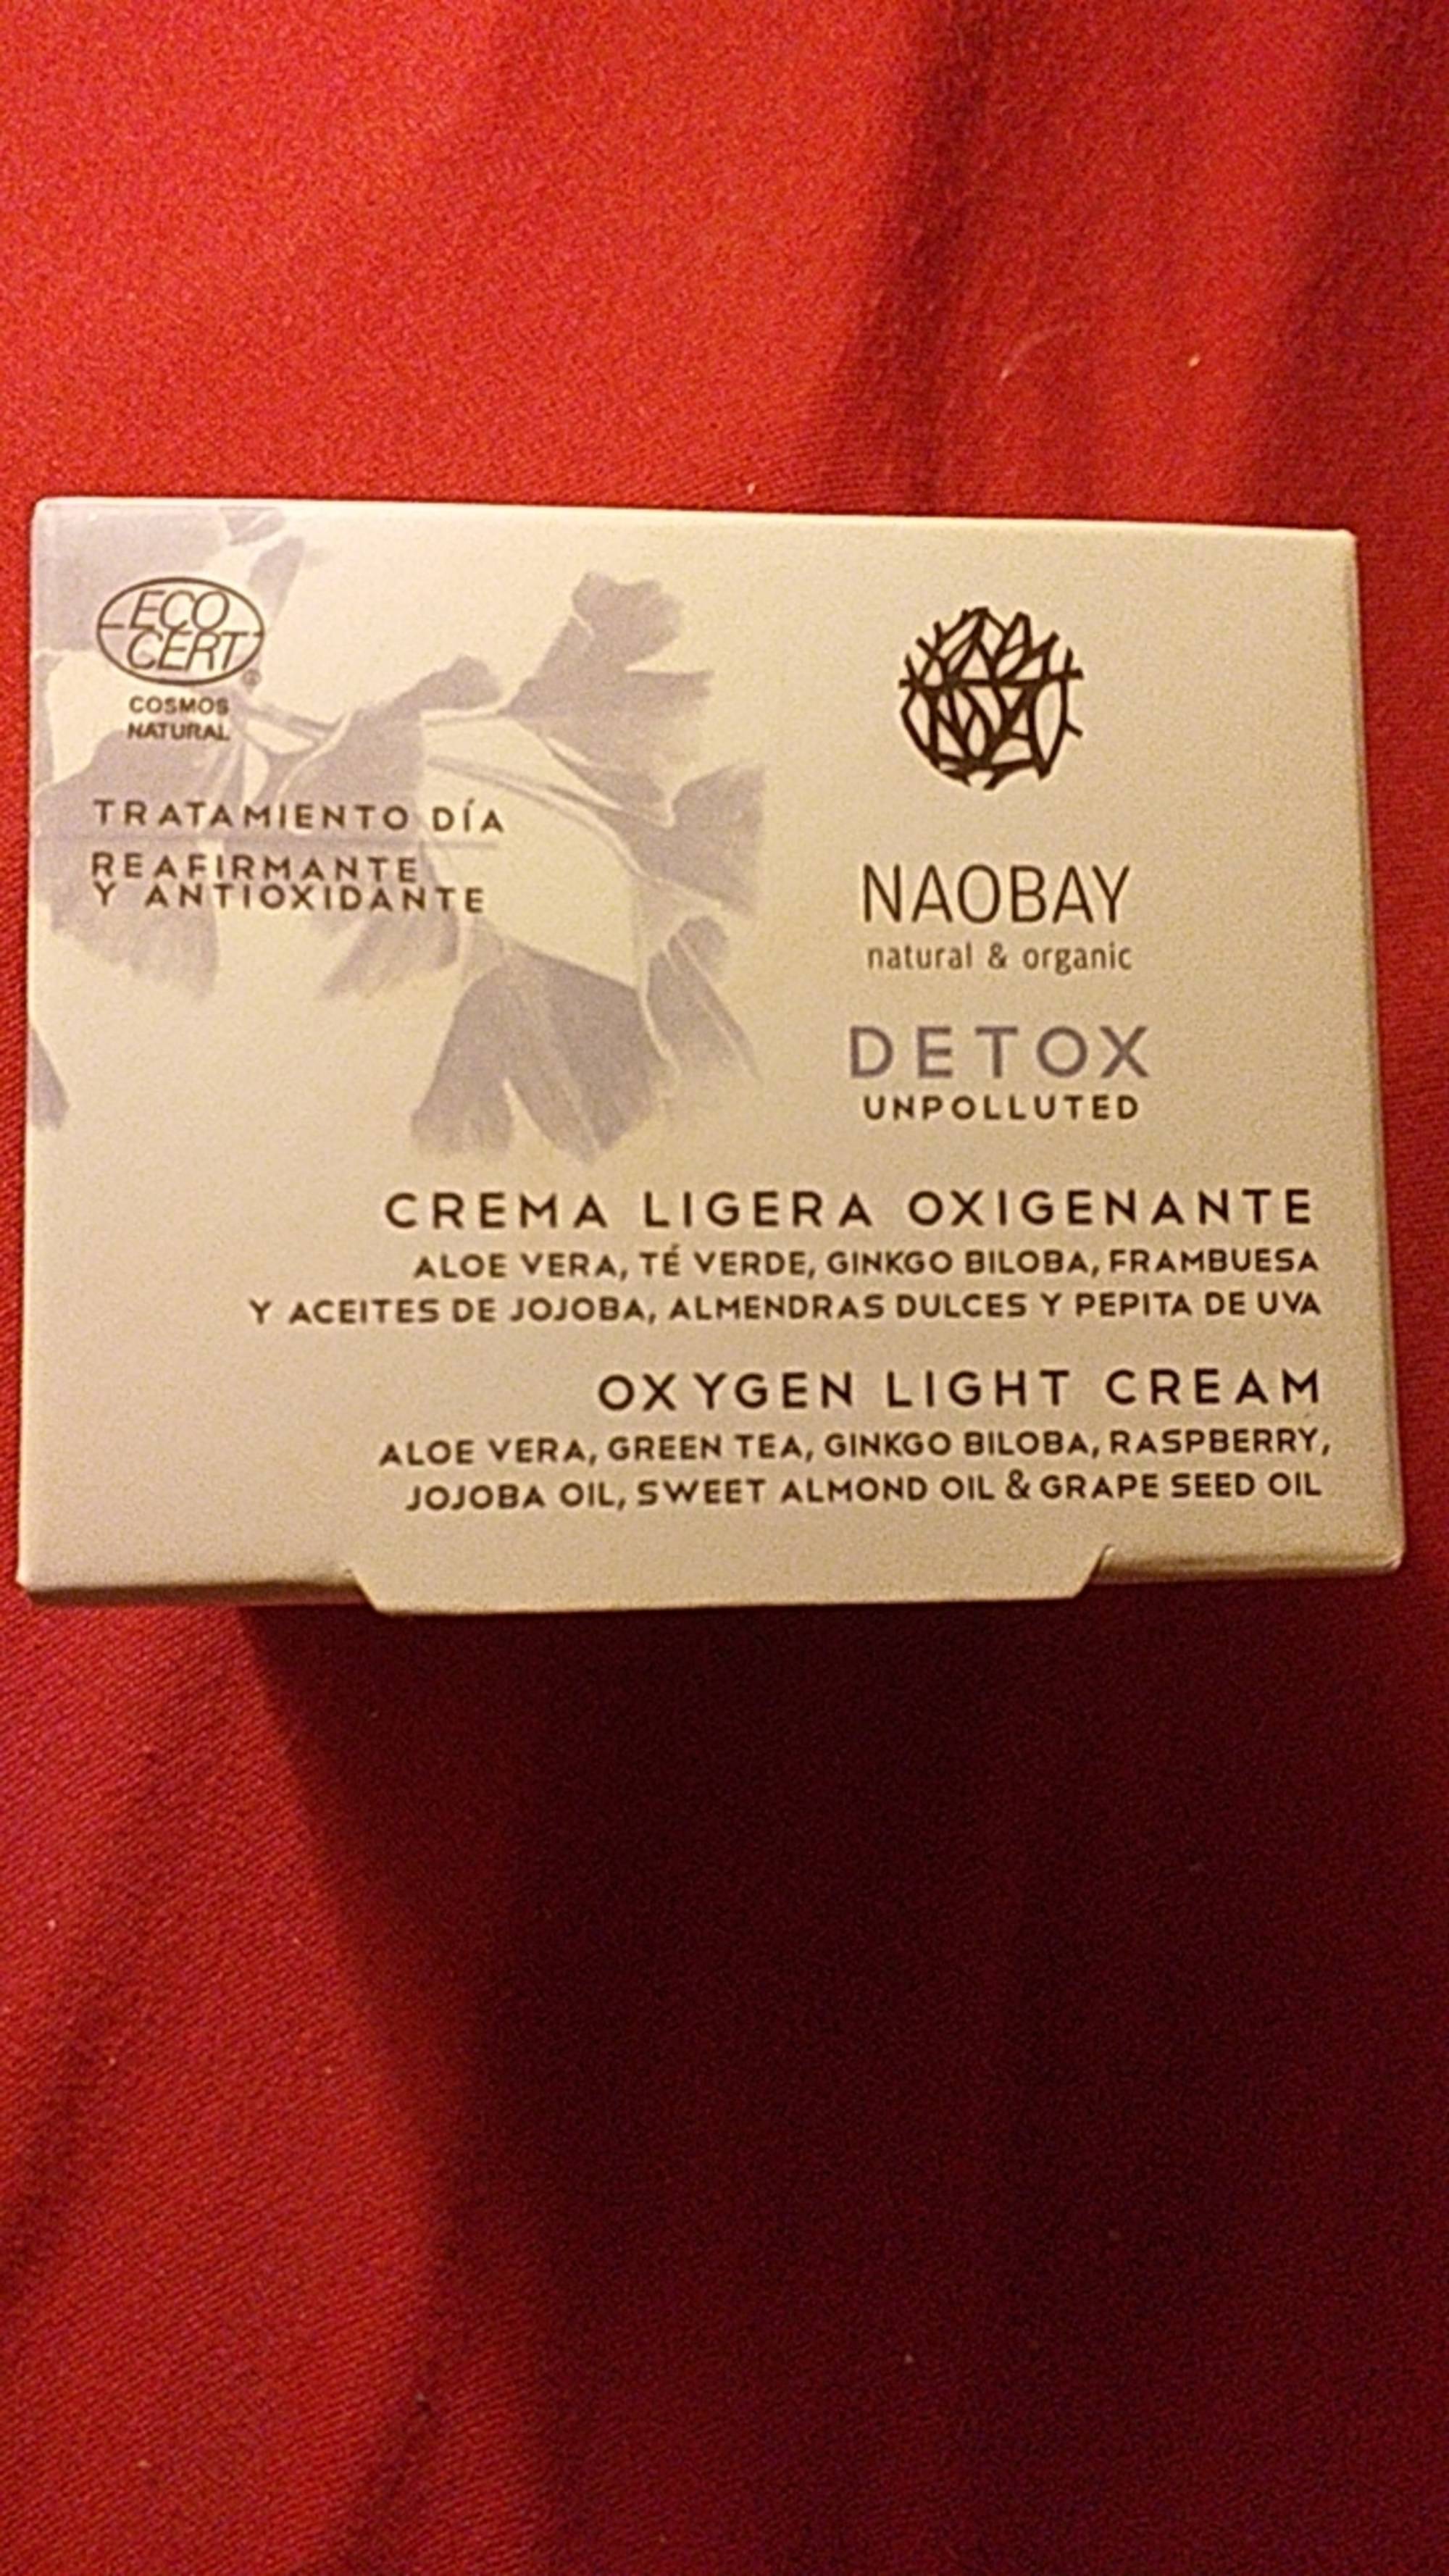 NAOBAY - Detox - Oxygen light cream